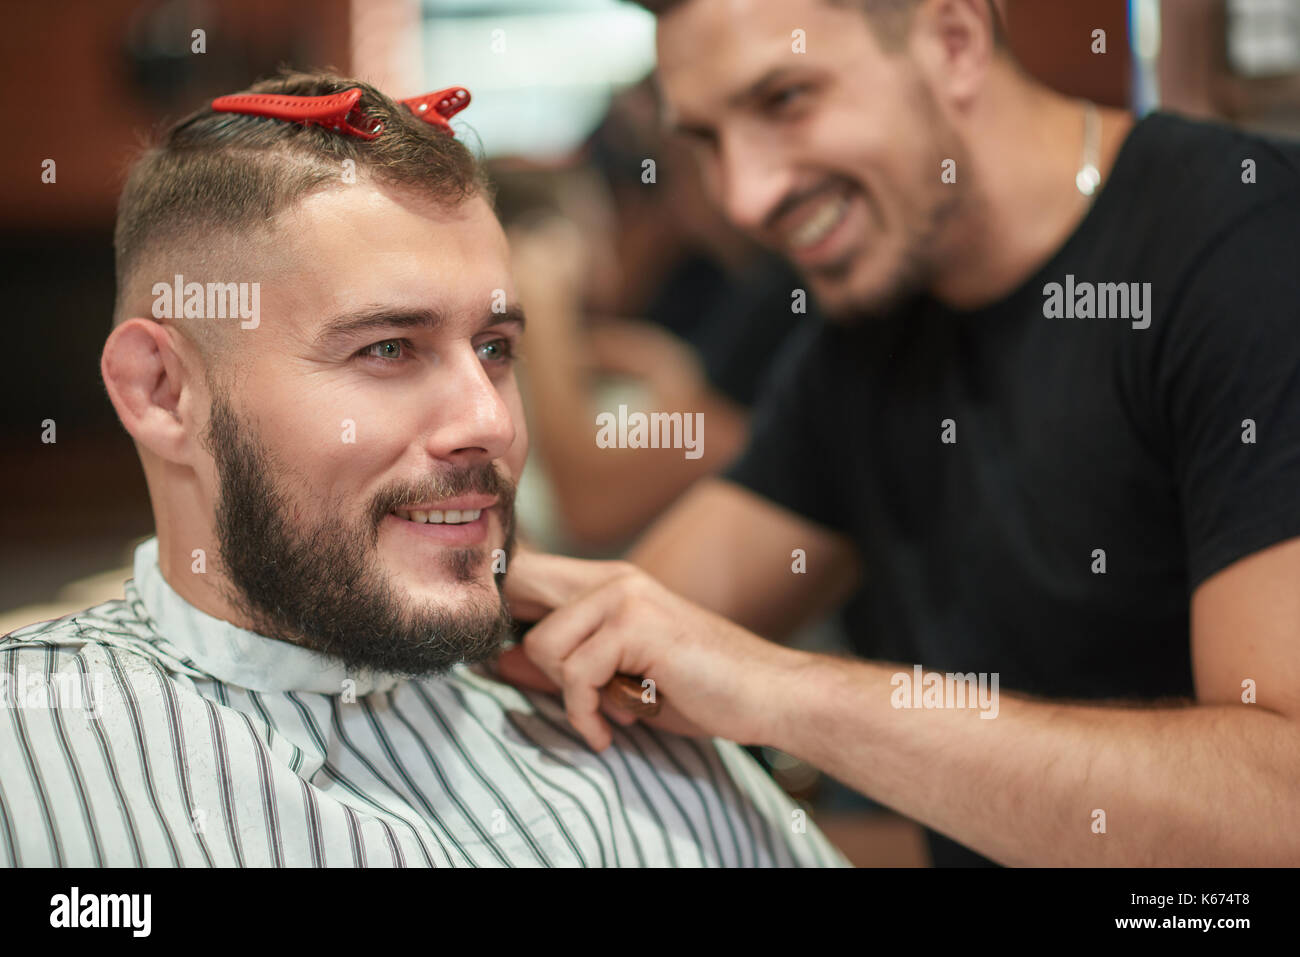 Young man at the barbershop Stock Photo